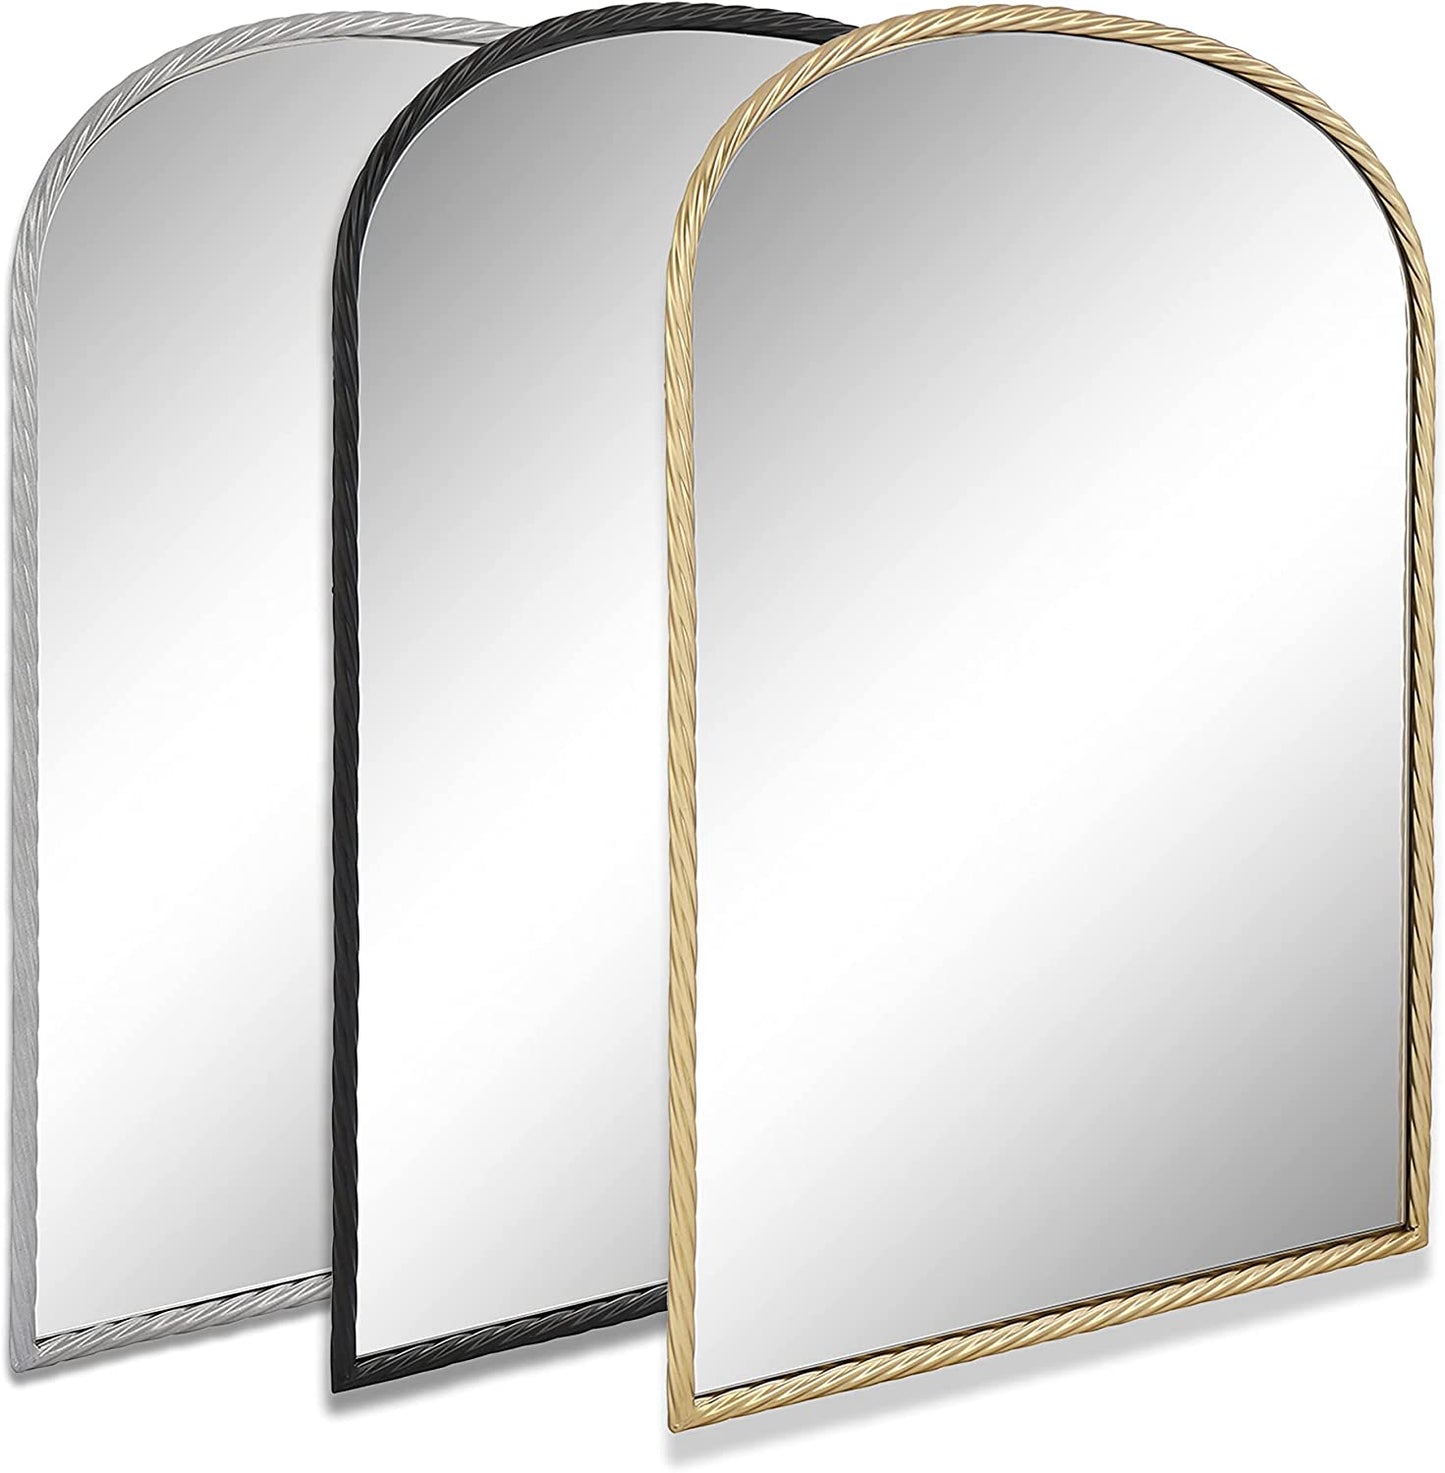 MacLuu Arch Metal Wall Mirror with Twisted Edge